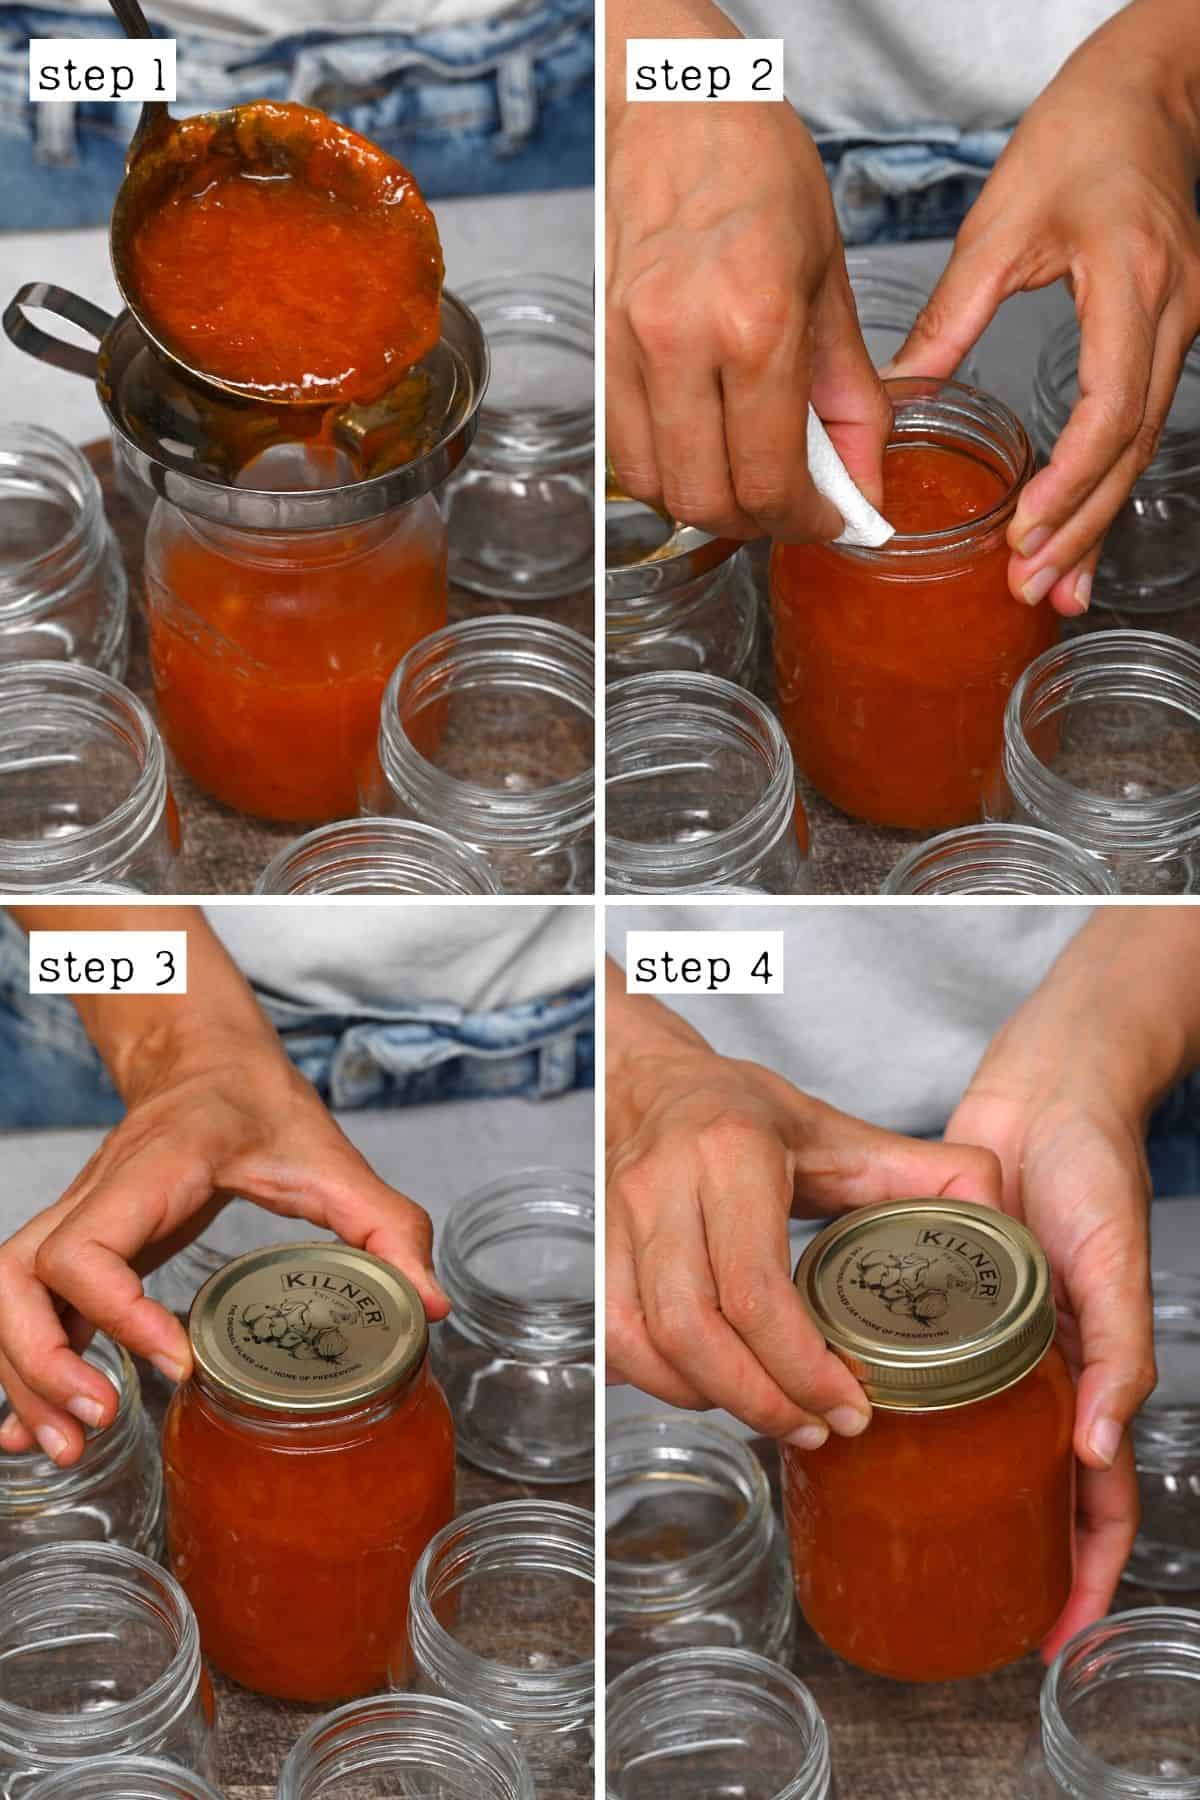 Steps for placing jam in jars